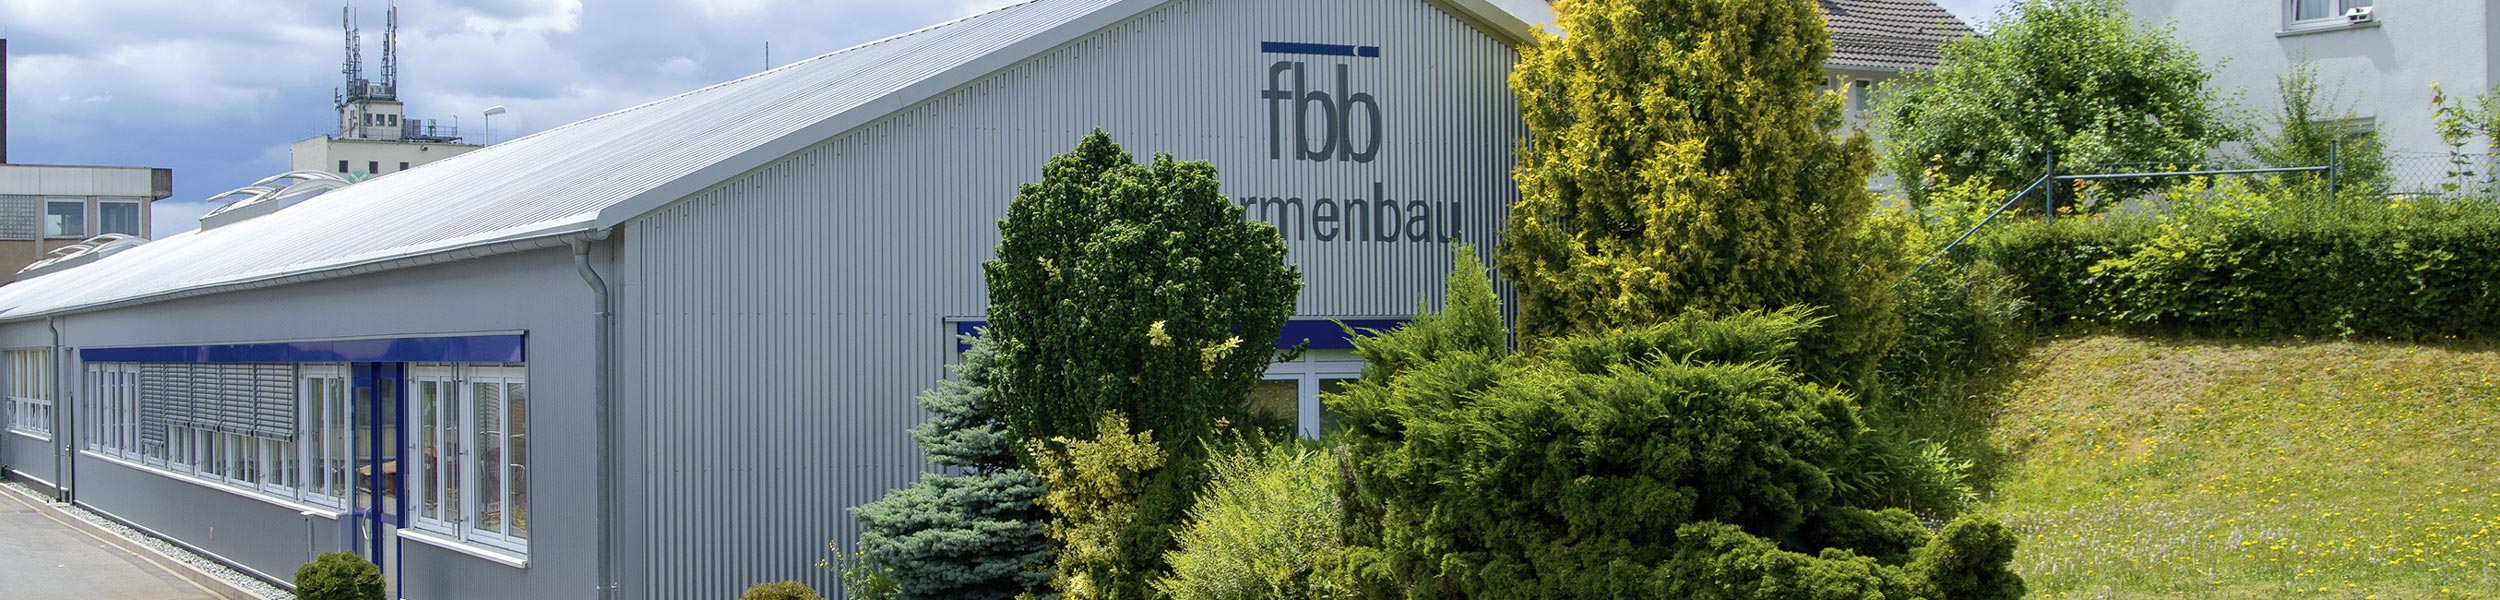 Firmenhistorie - FBB Formenbau Buchen GmbH